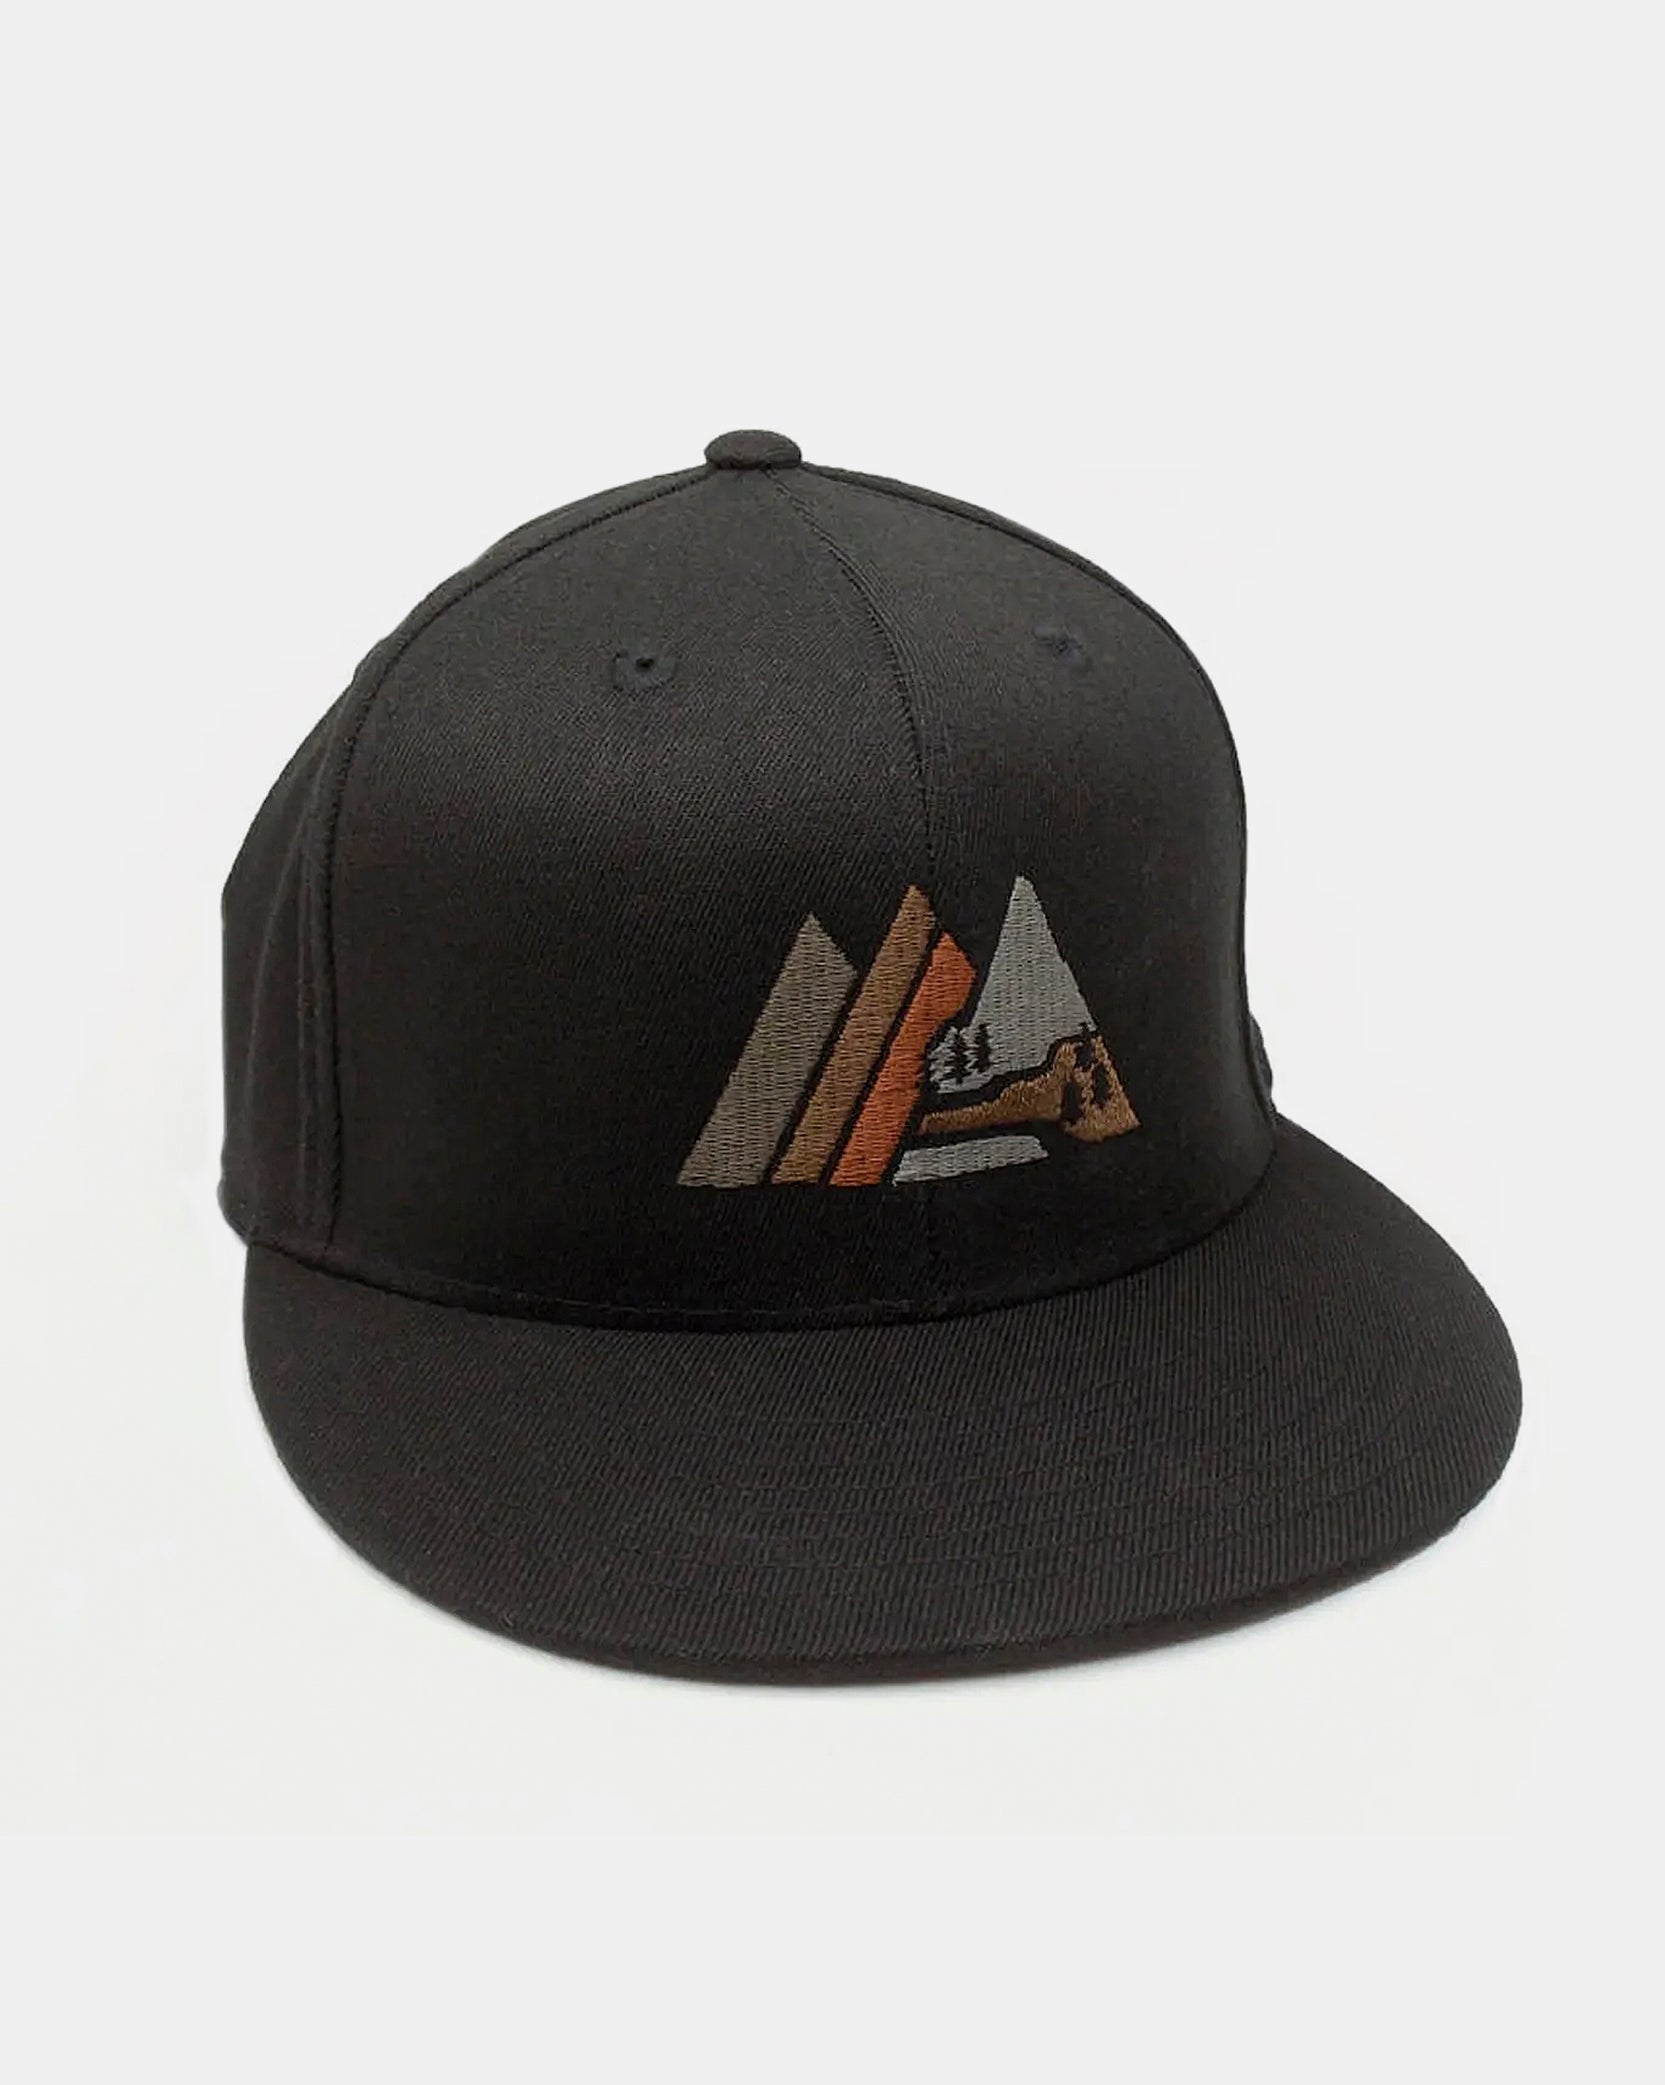 Retro Mountain Black Cap 1